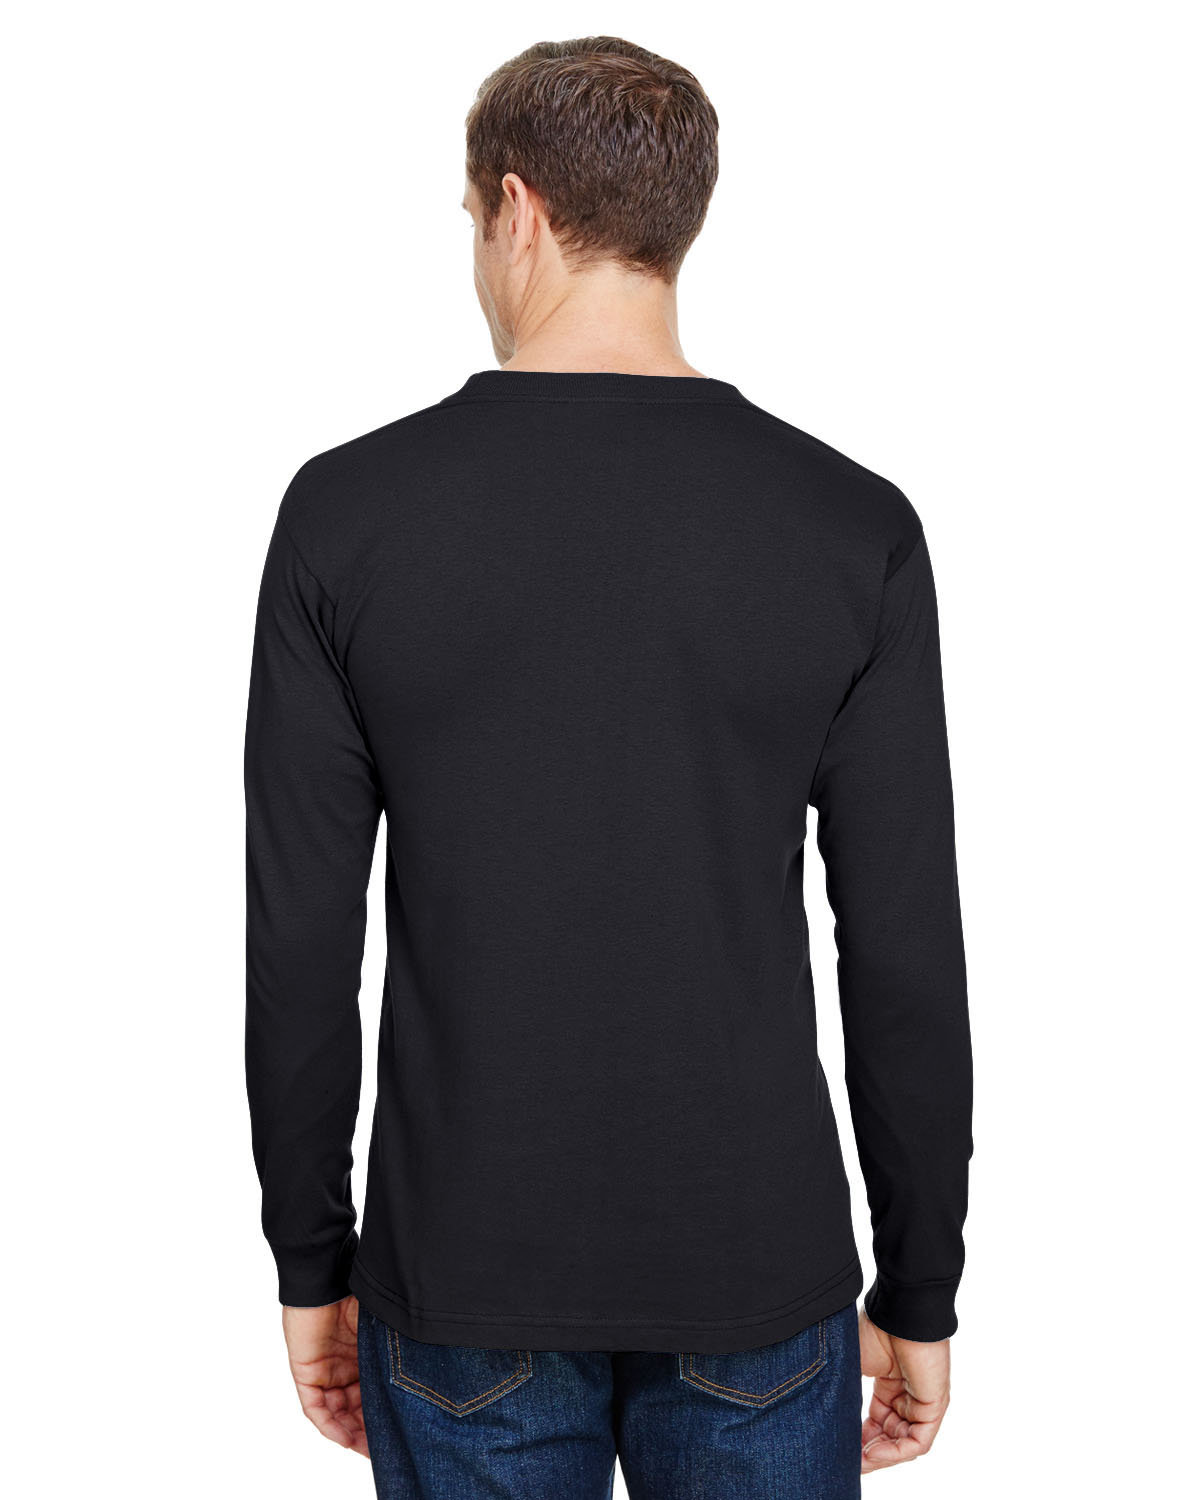 Bayside Unisex Union-Made Long-Sleeve Pocket Crew T-Shirt | alphabroder